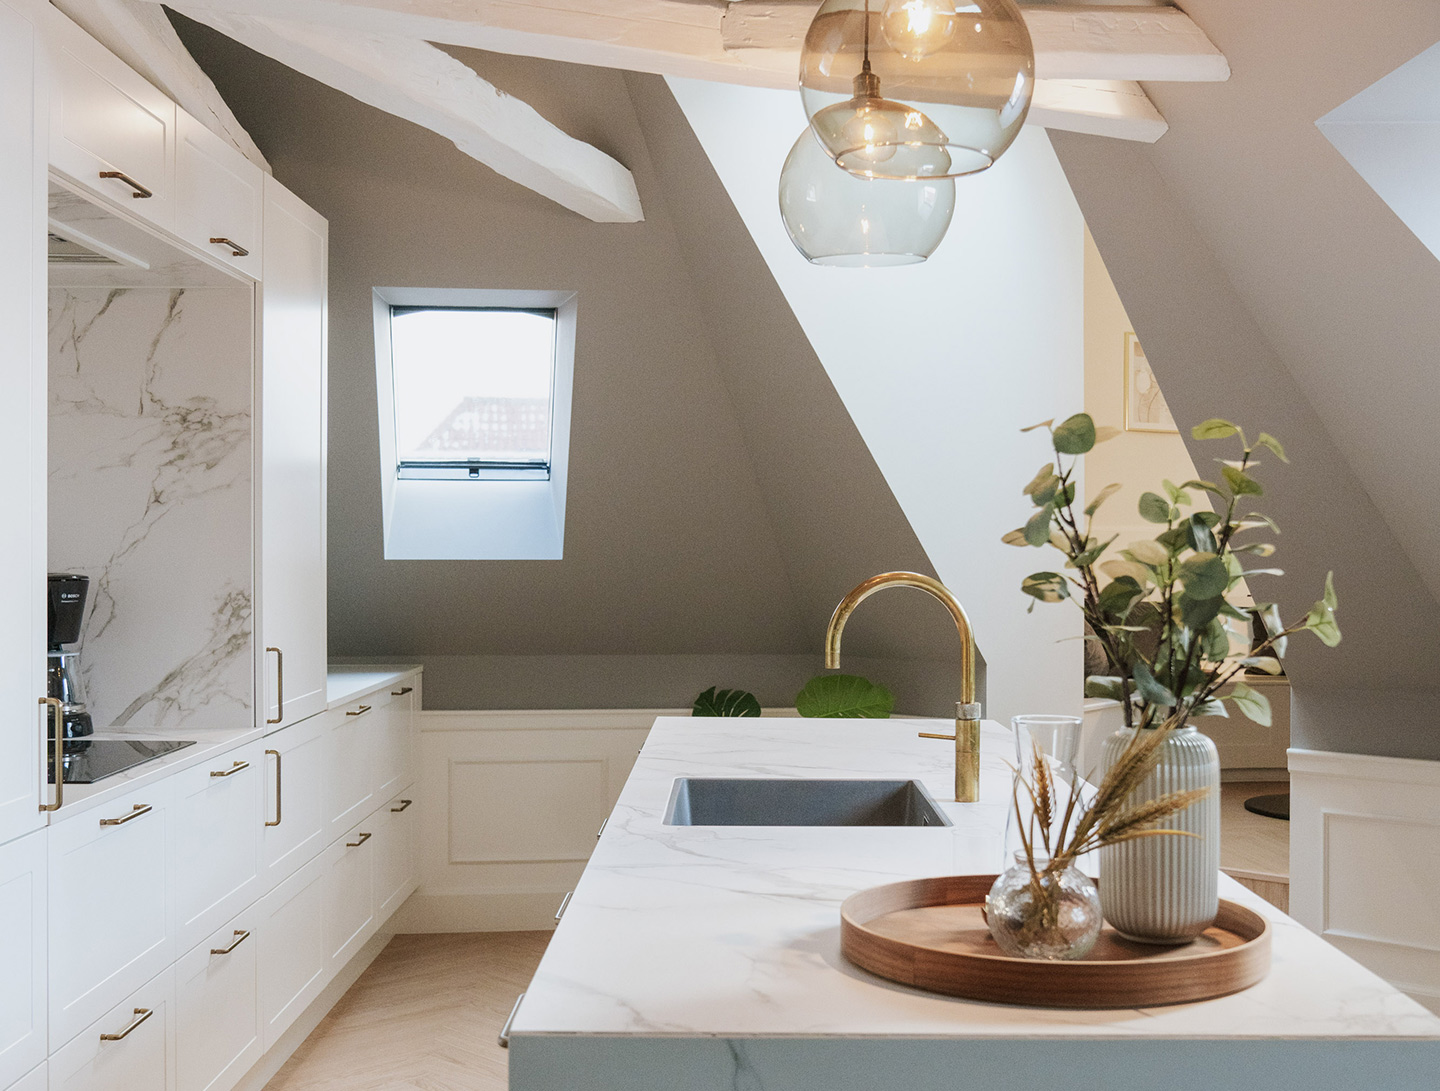 Image of Case Ankerhus cover kitchen in Designer Saana Mantere chooses Dekton for her kitchen renovation - Cosentino